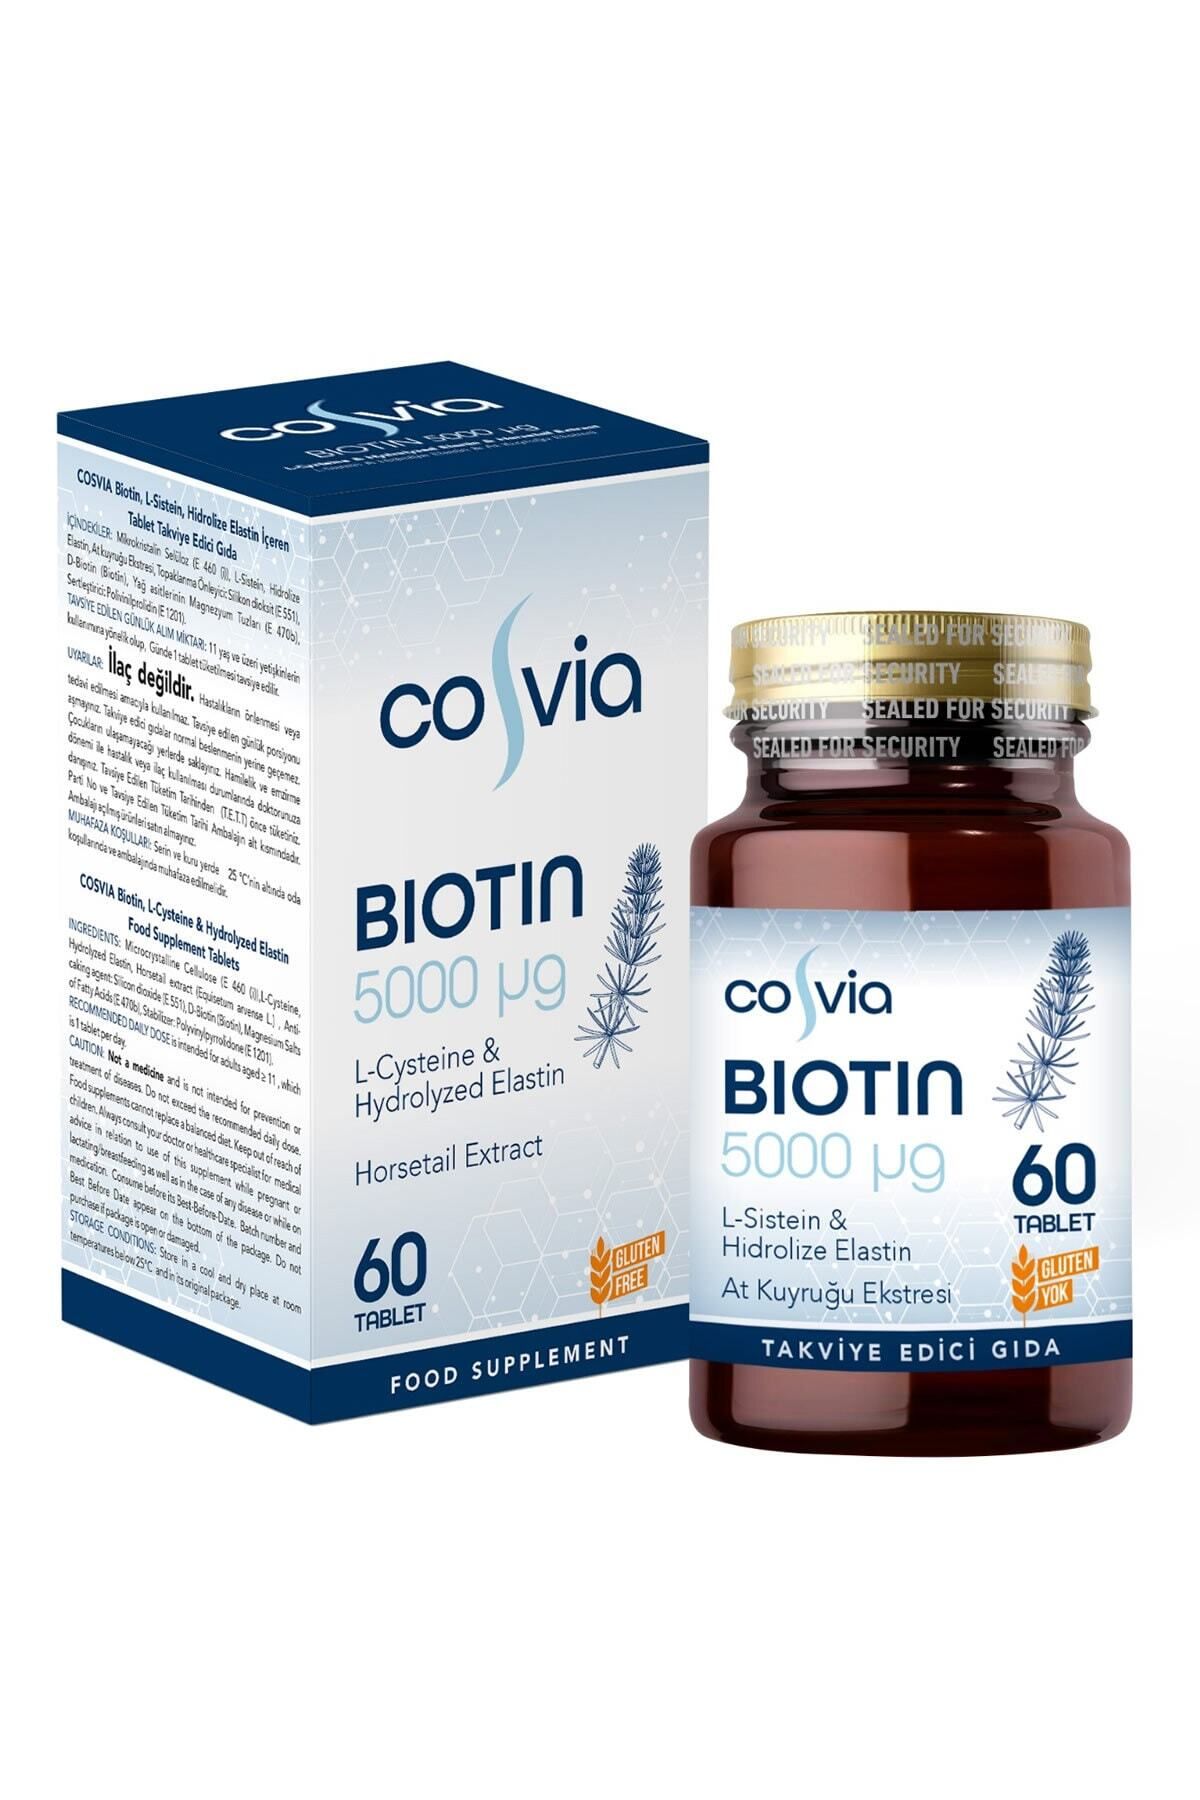 COSVIA Biotin 5000 Mcg. L-sistein, Hidrolize Elastin, At Kuyruğu Ekstresi 60 Tablet